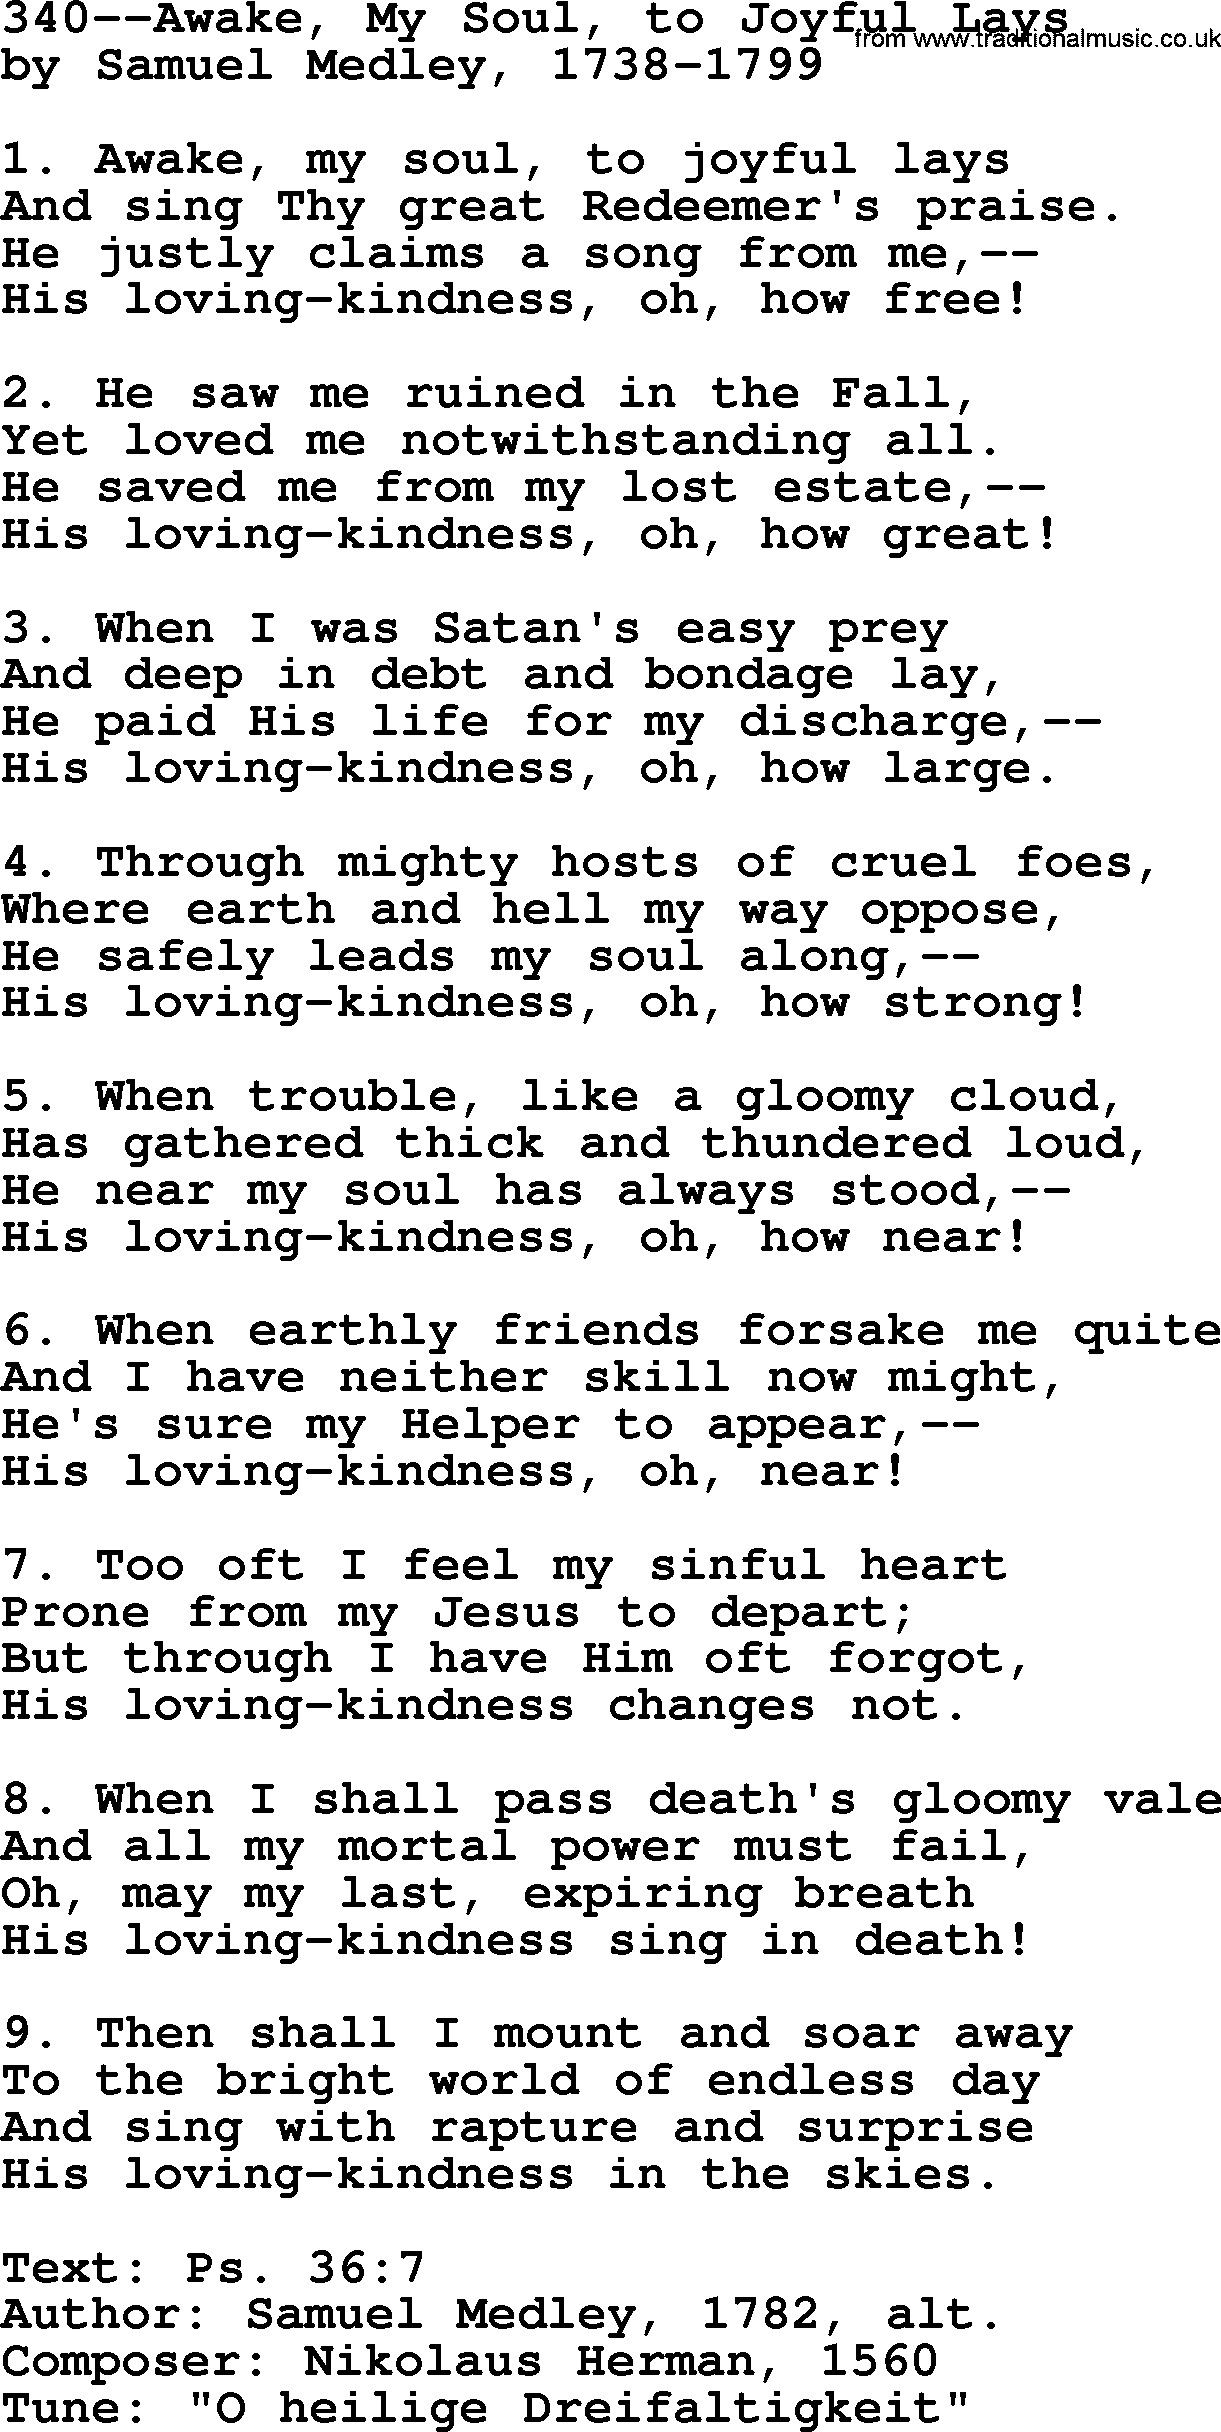 Lutheran Hymn: 340--Awake, My Soul, to Joyful Lays.txt lyrics with PDF